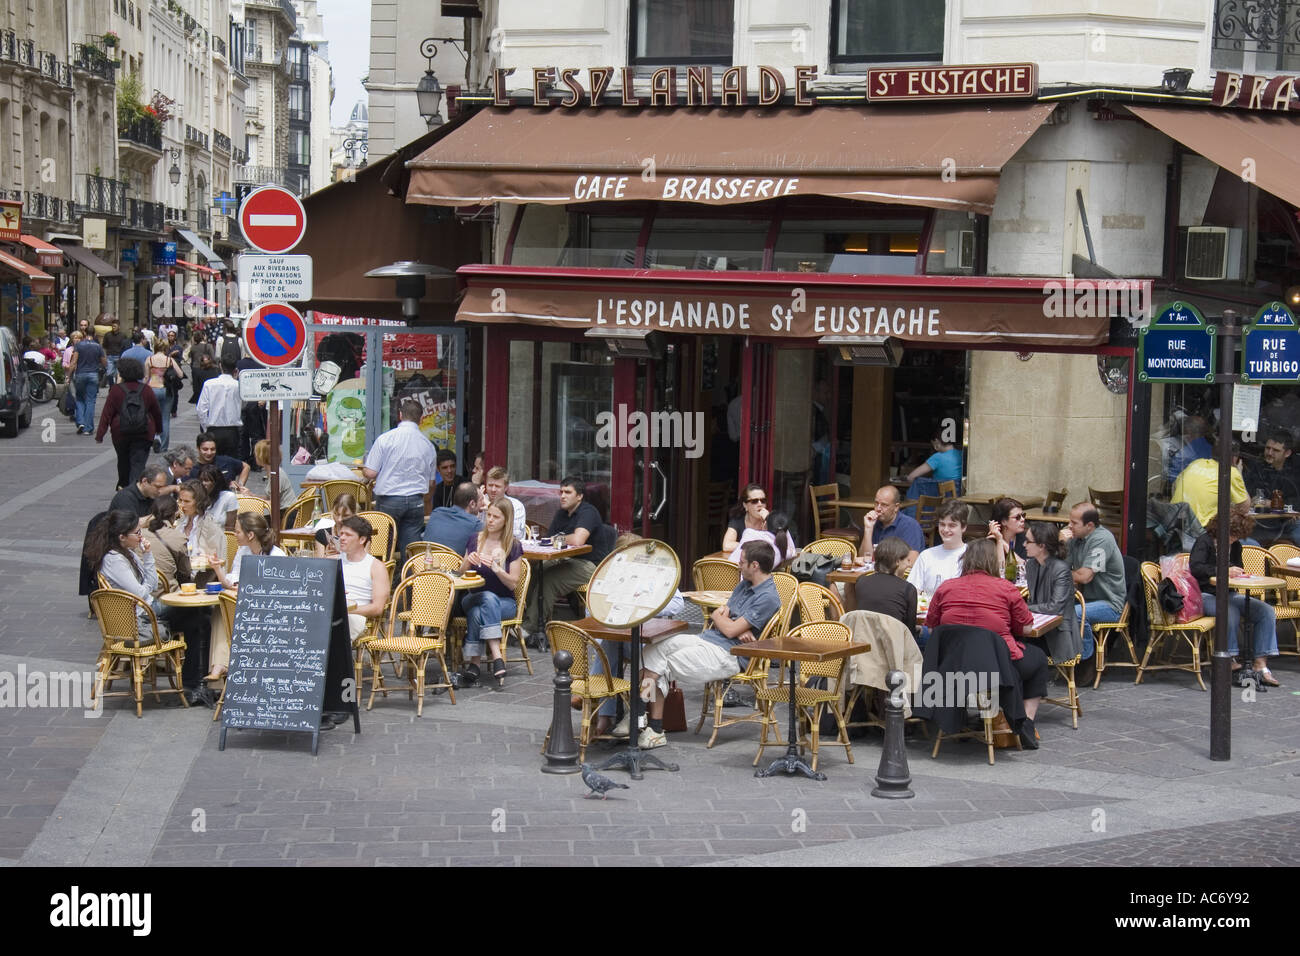 L Esplanade Cafe Brasserie St Eustache on Rue Montorgueil Paris France Stock Photo